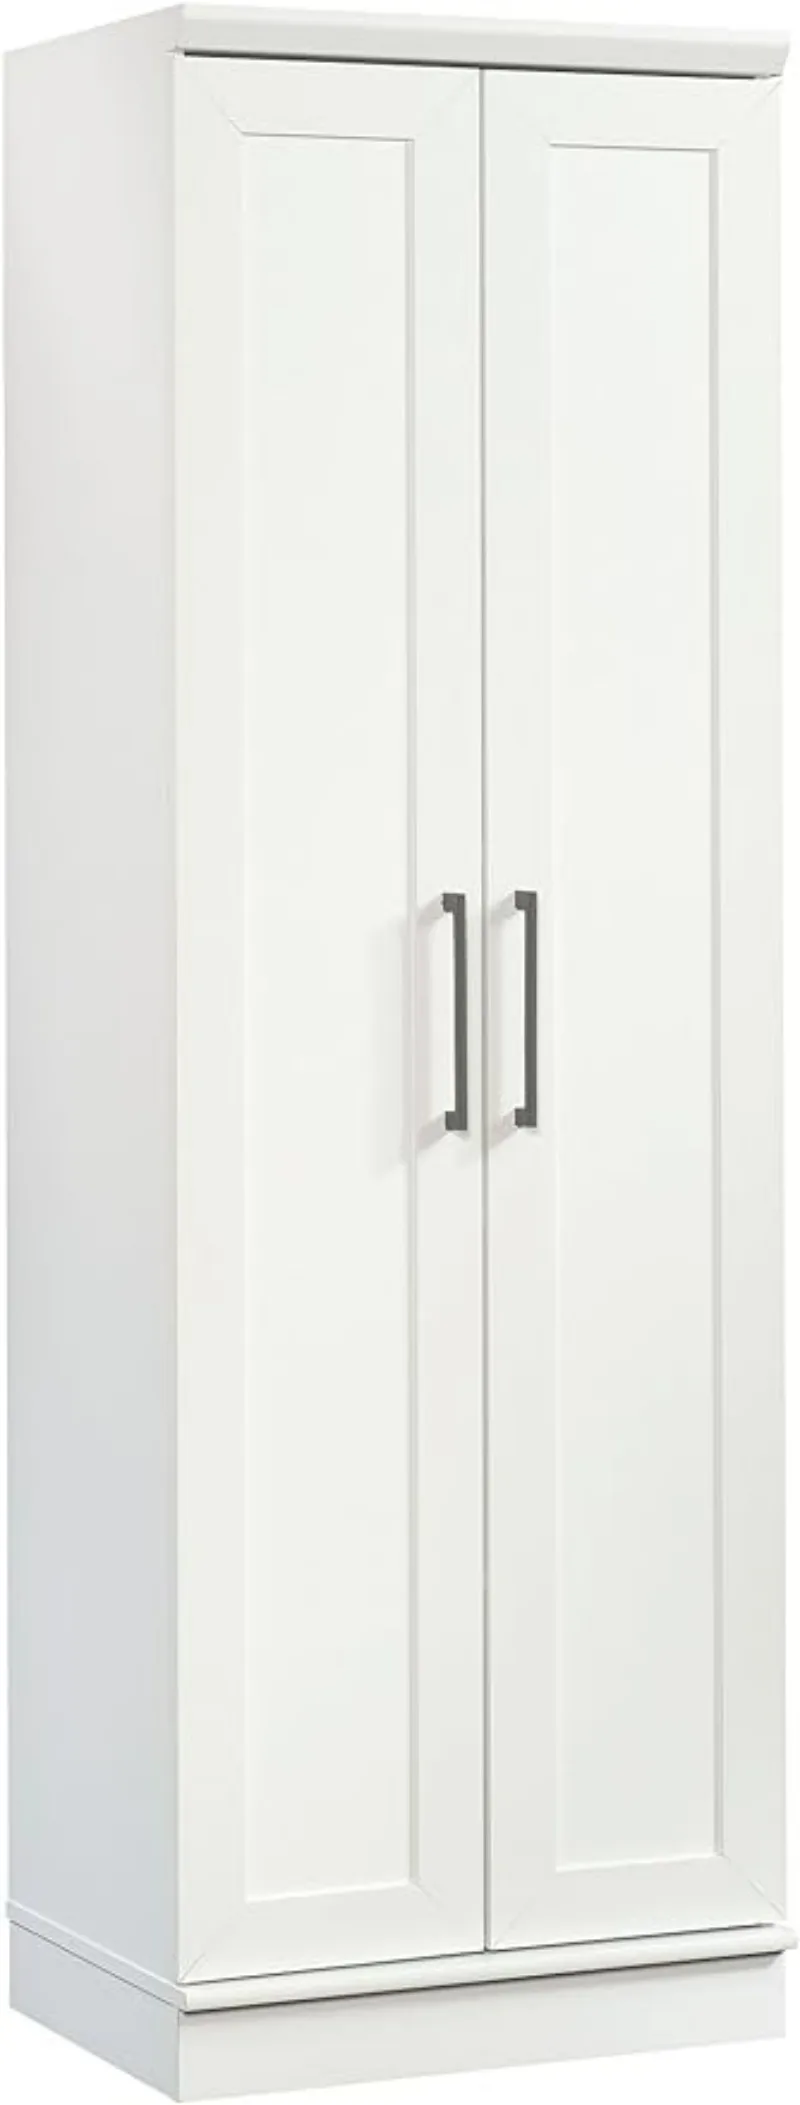 

Sauder HomePlus Storage Pantry cabinets, L: 23.31" x W: 17.01" x H: 70.91", Soft White finish